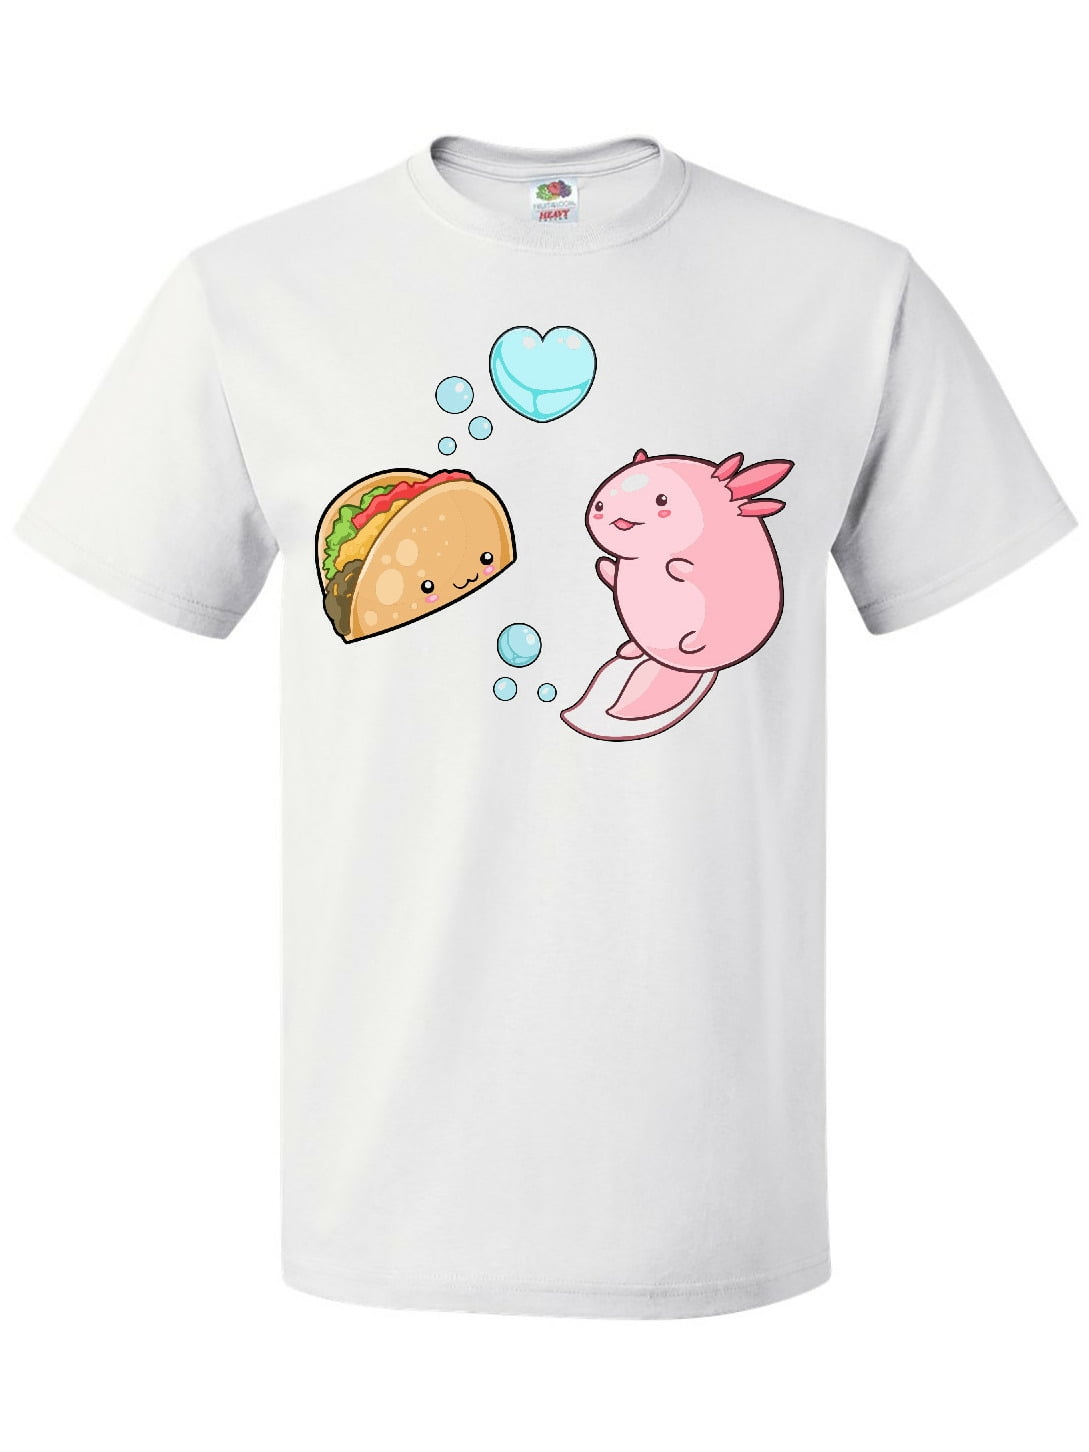 Axolotl Life Cycle Short-Sleeve Unisex T-Shirt